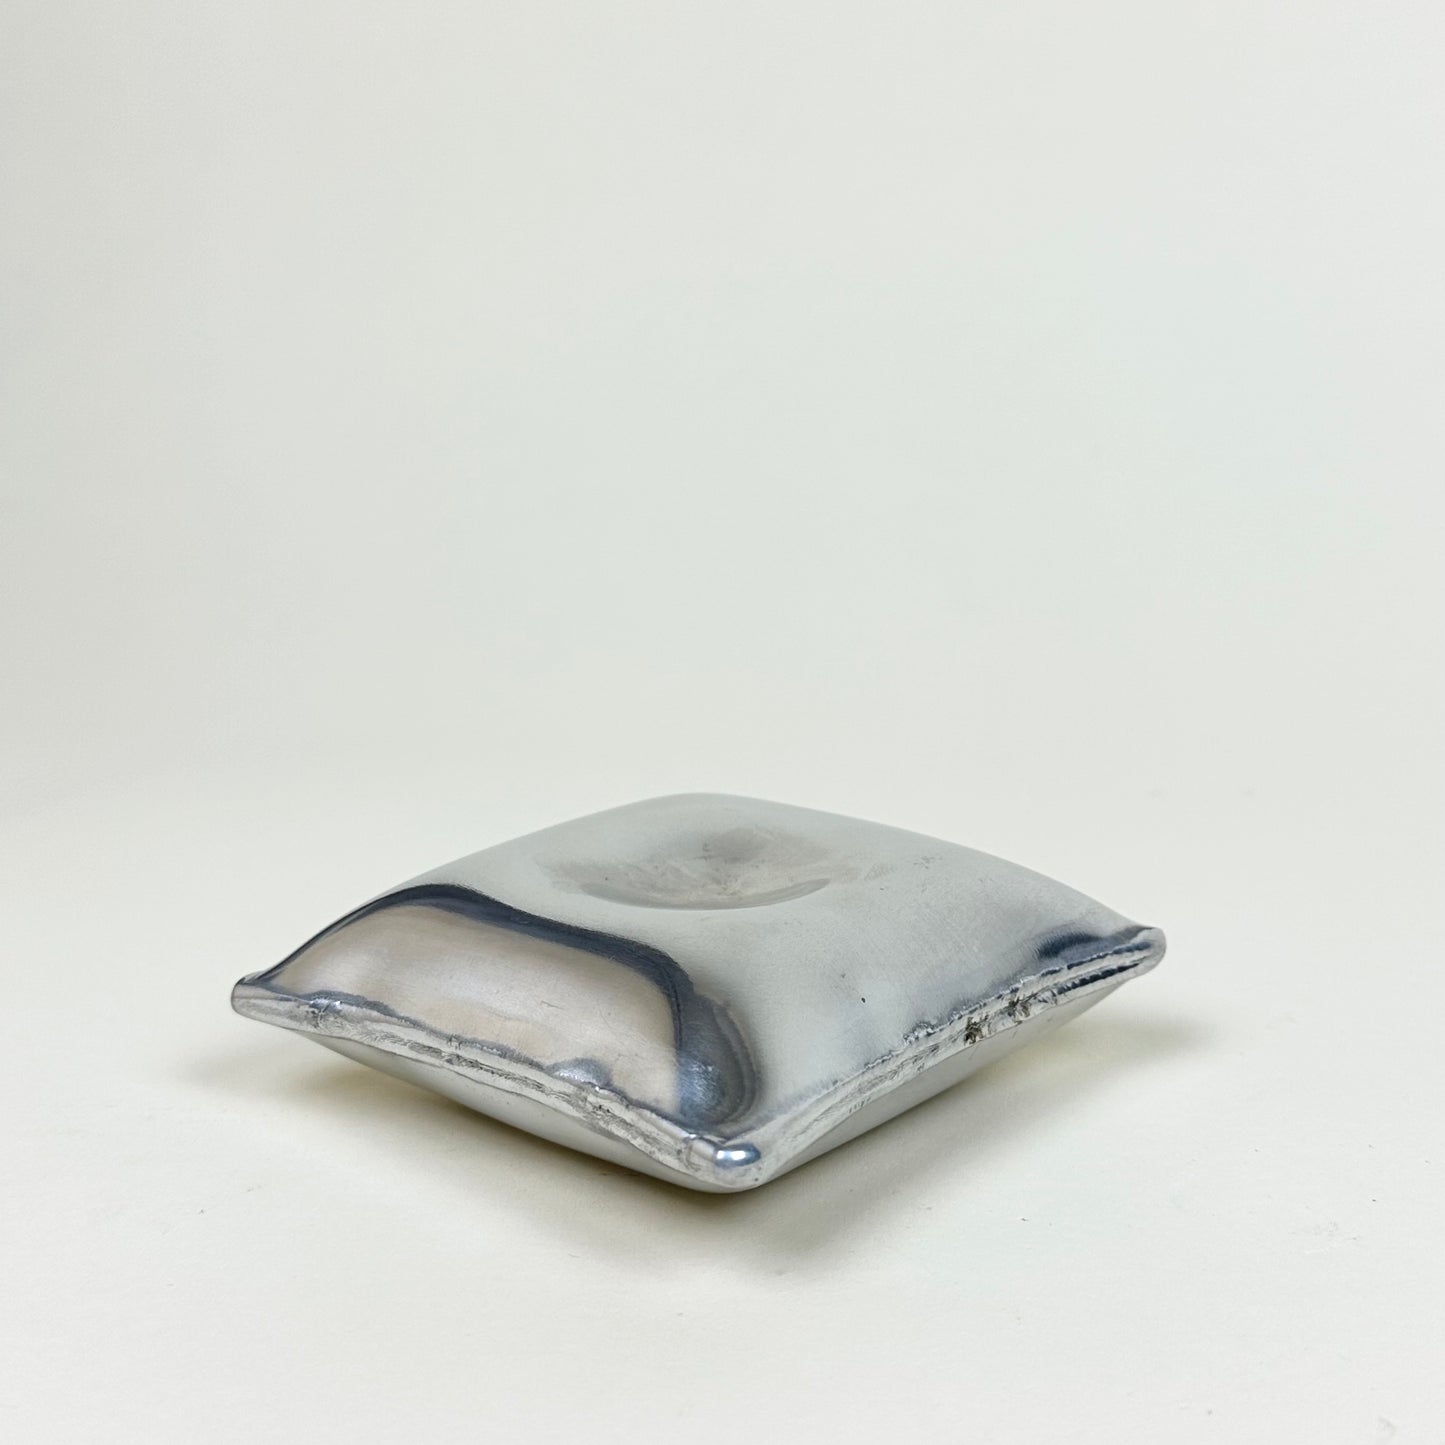 Aluminum Pillow, Standard Size, by Emma Stocklassa